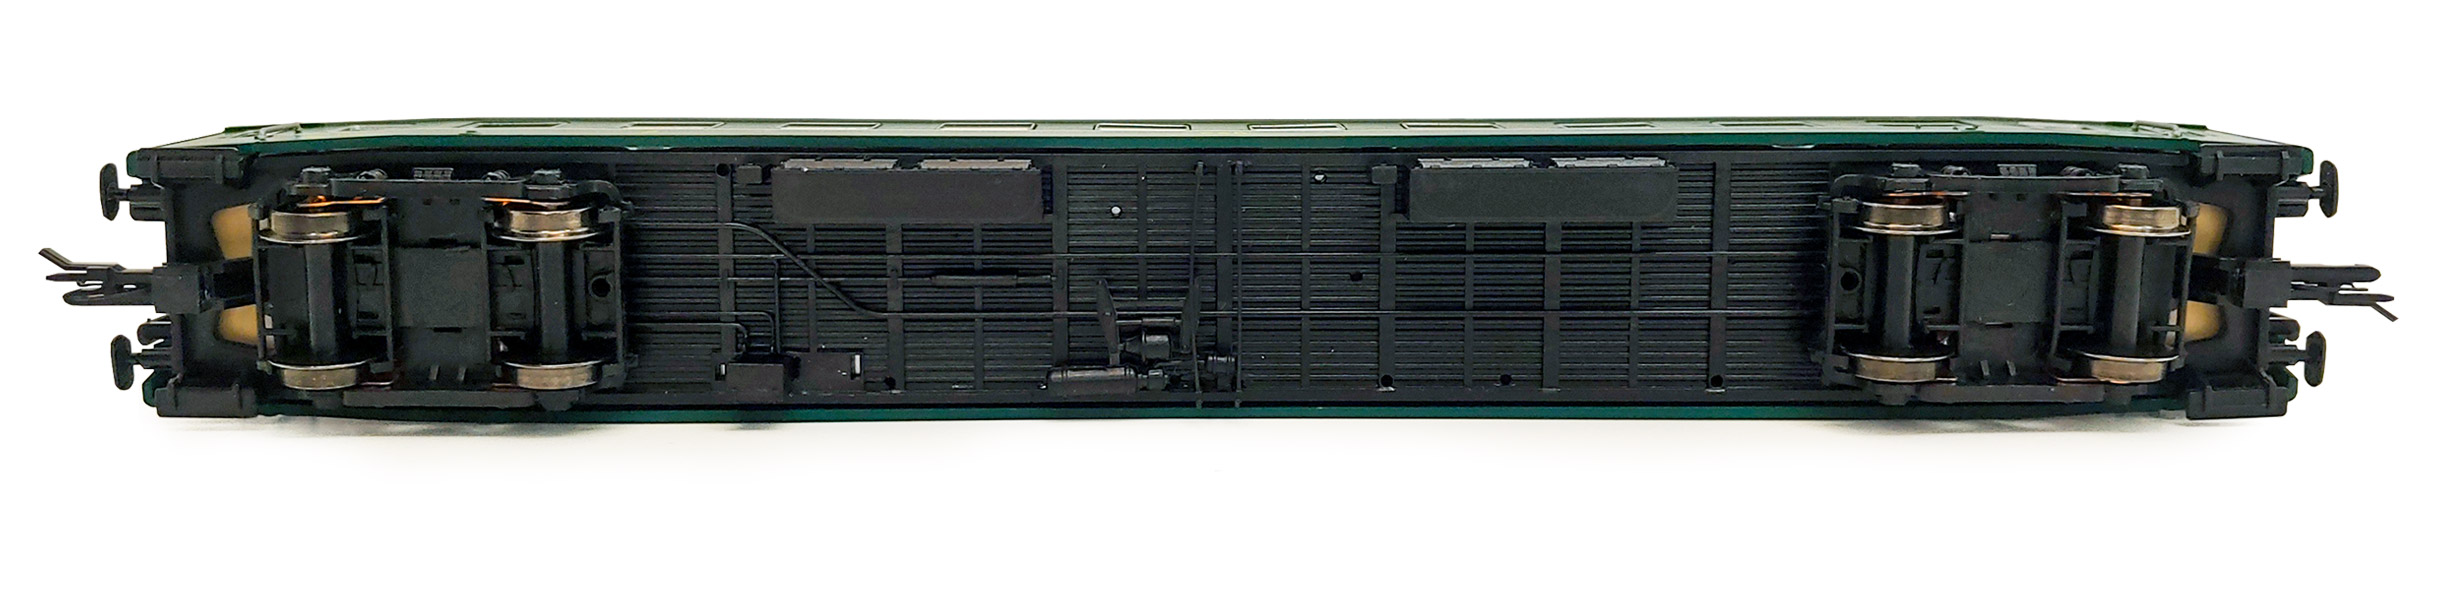 Podvozok – Osobný vagón Bai – štvordverák ČSD TT | Kolmar